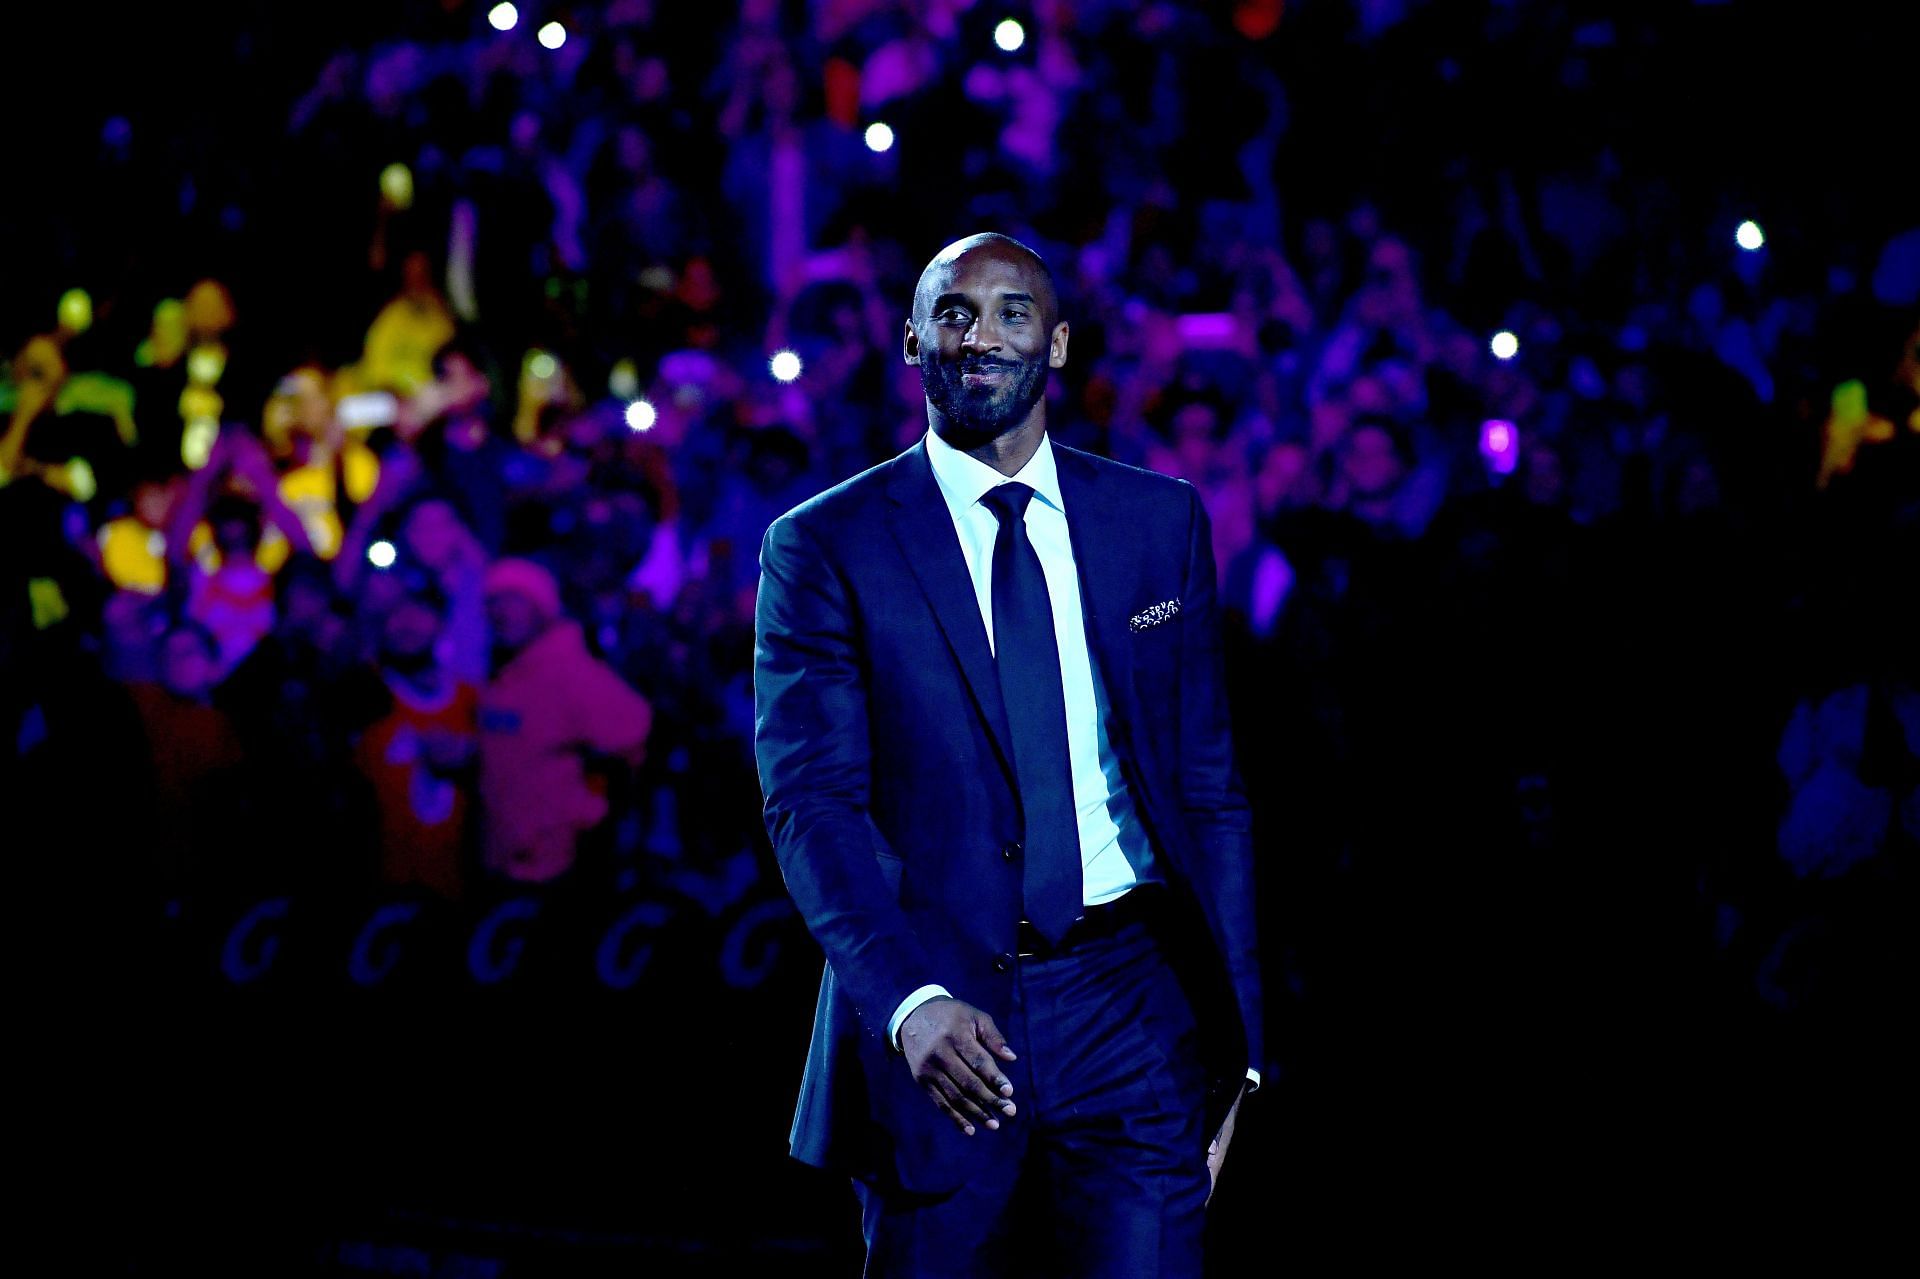 Los Angeles Lakers and NBA legand Kobe Bryant